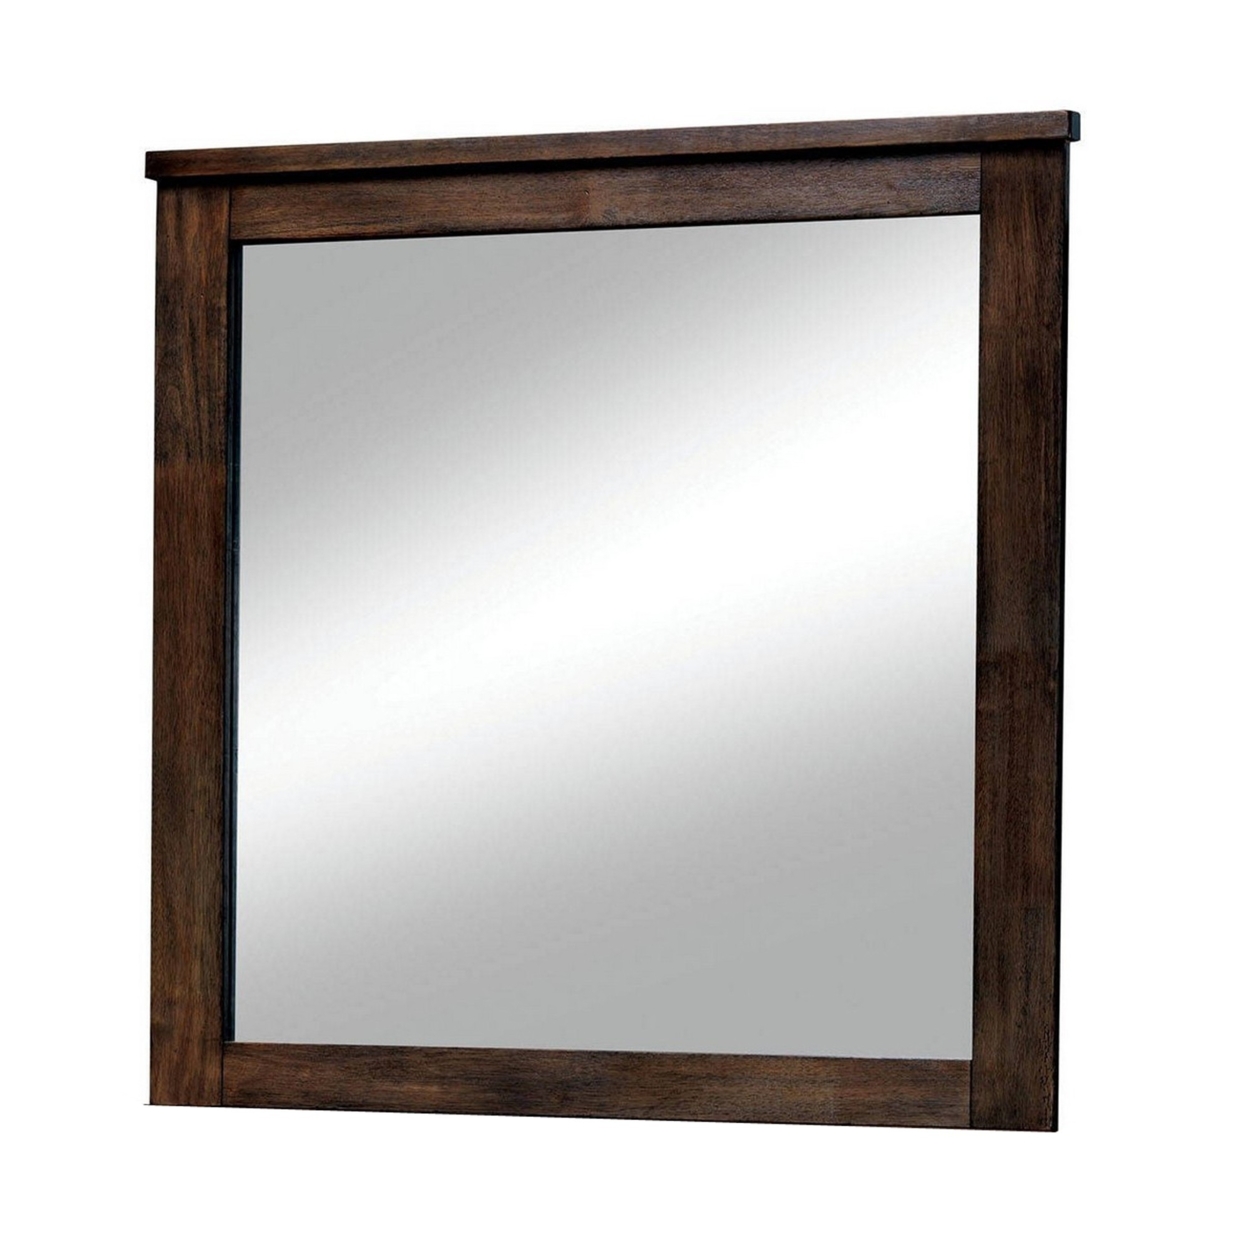 Elkton Transitional Style Mirror , Oak Finish- Saltoro Sherpi